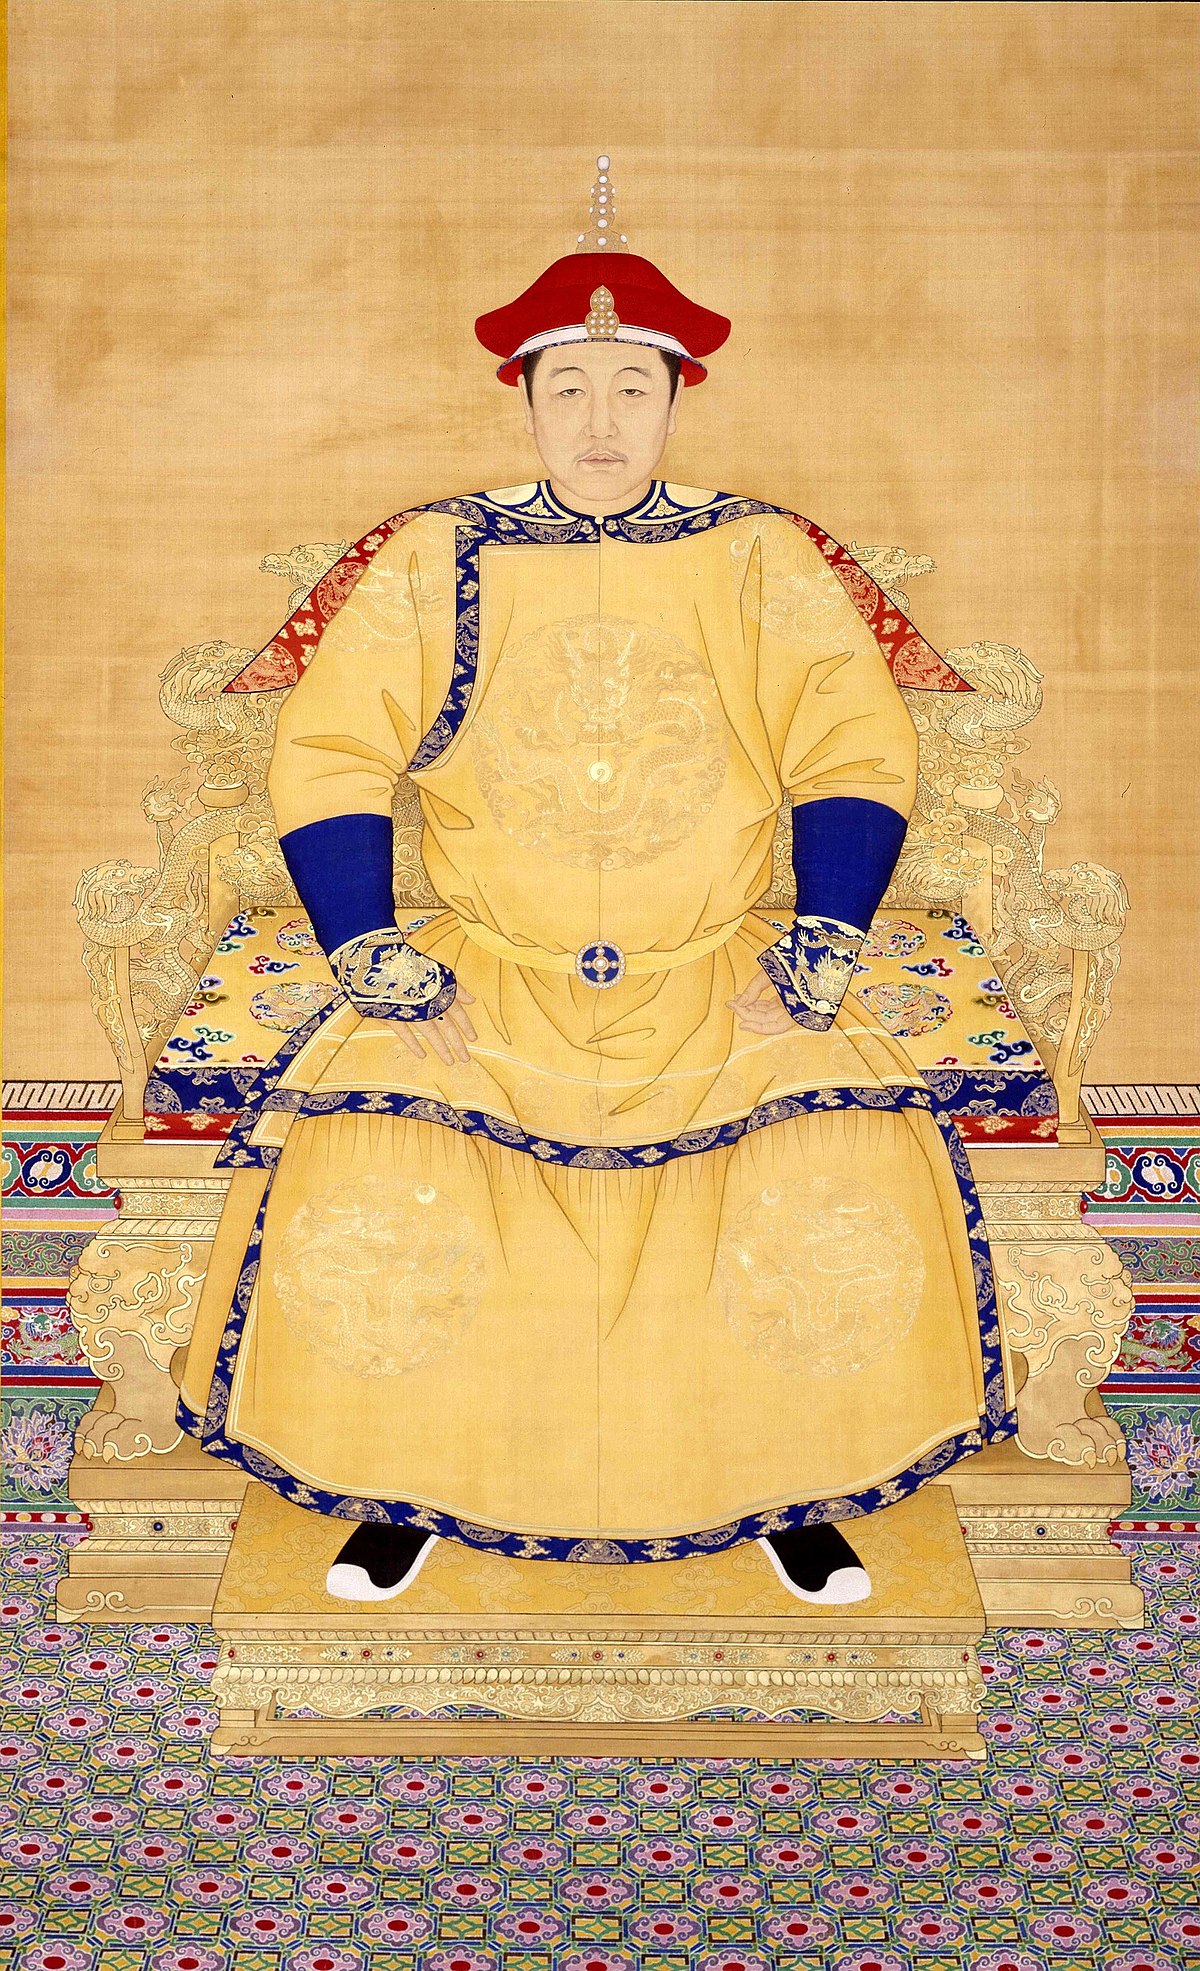 Shunzhi Emperor - Wikipedia